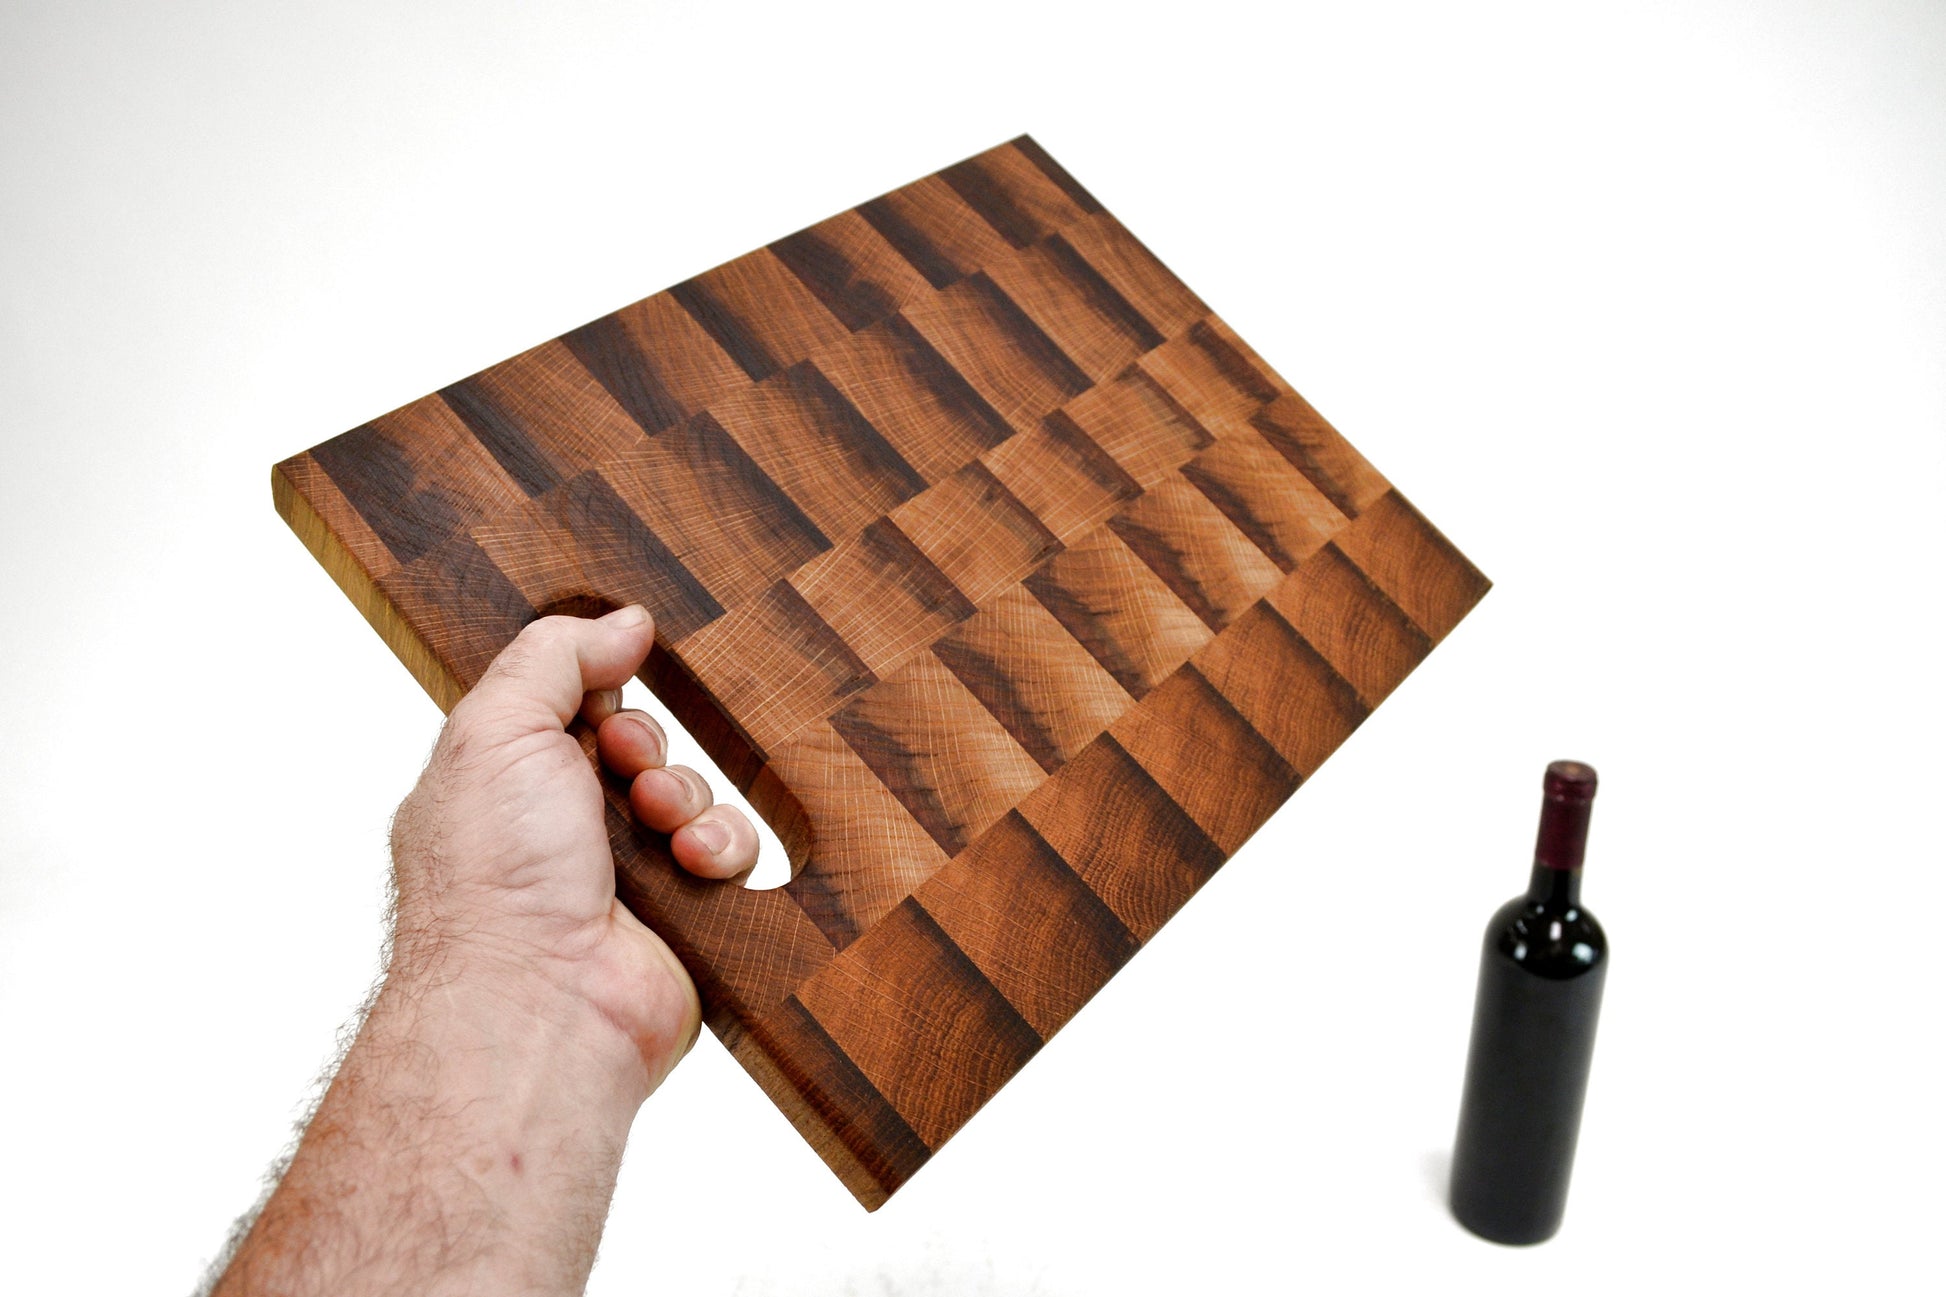 Tafao - California Wine Barrel Charcuterie and Cutting Board or Serving Tray